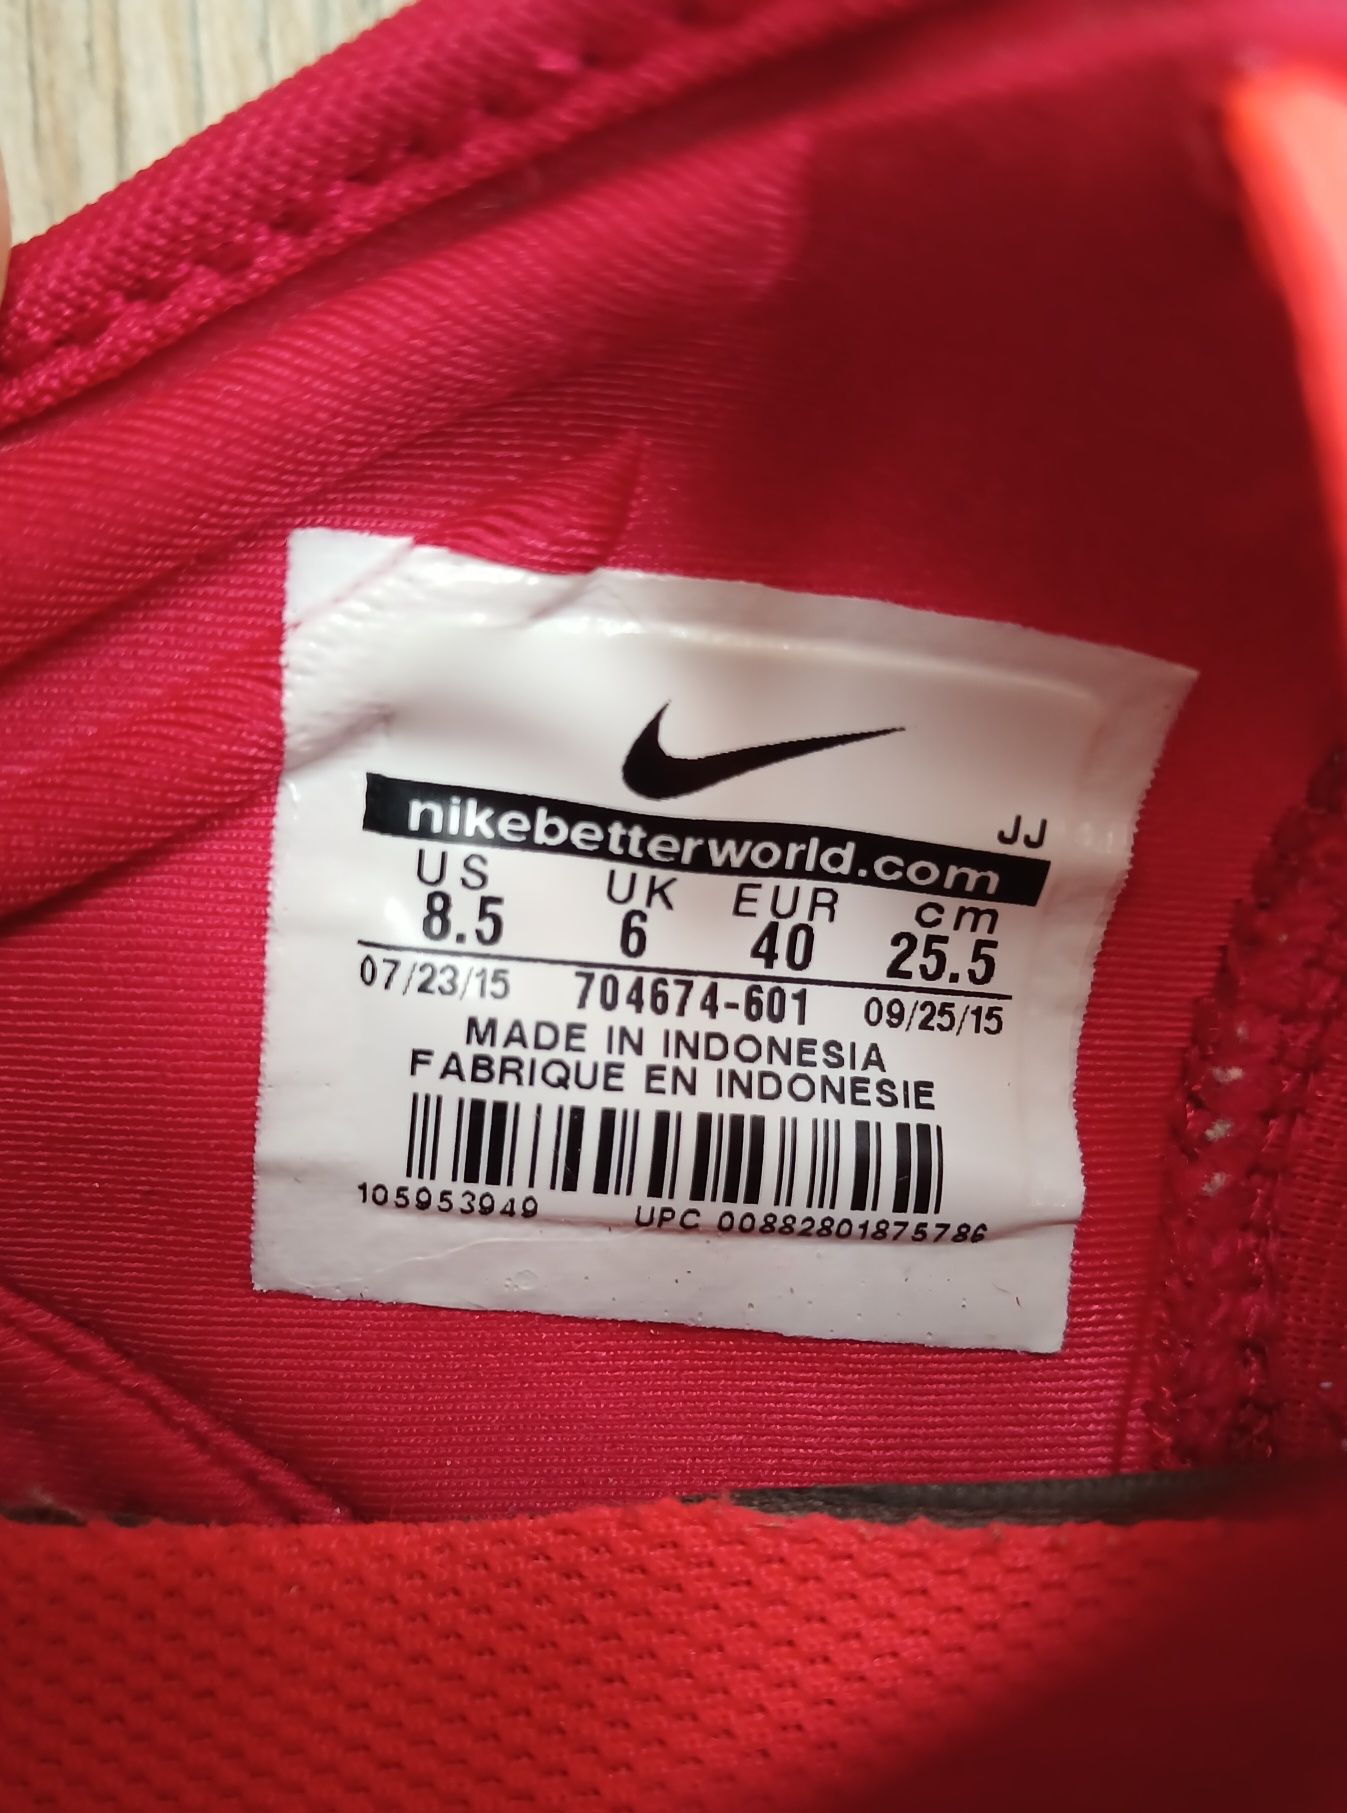 Кроссовки Nike р 40 (25,5 см) ц 1000 гр ориг. отличн. состояние